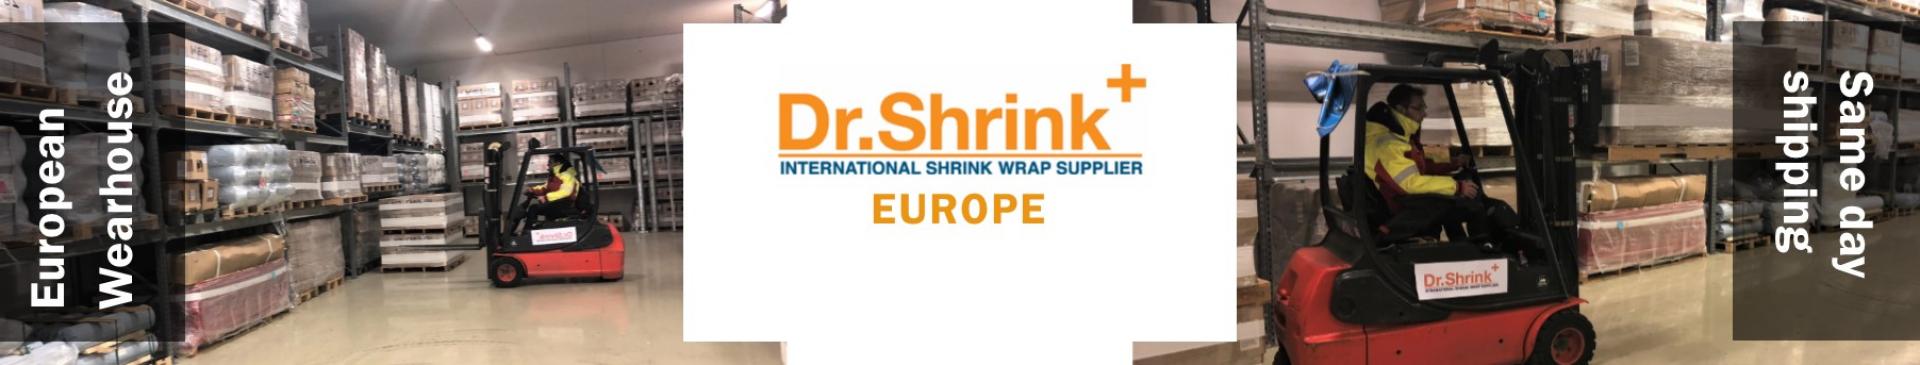 Dr. shrink wrap europe wearhouse alfa soultion